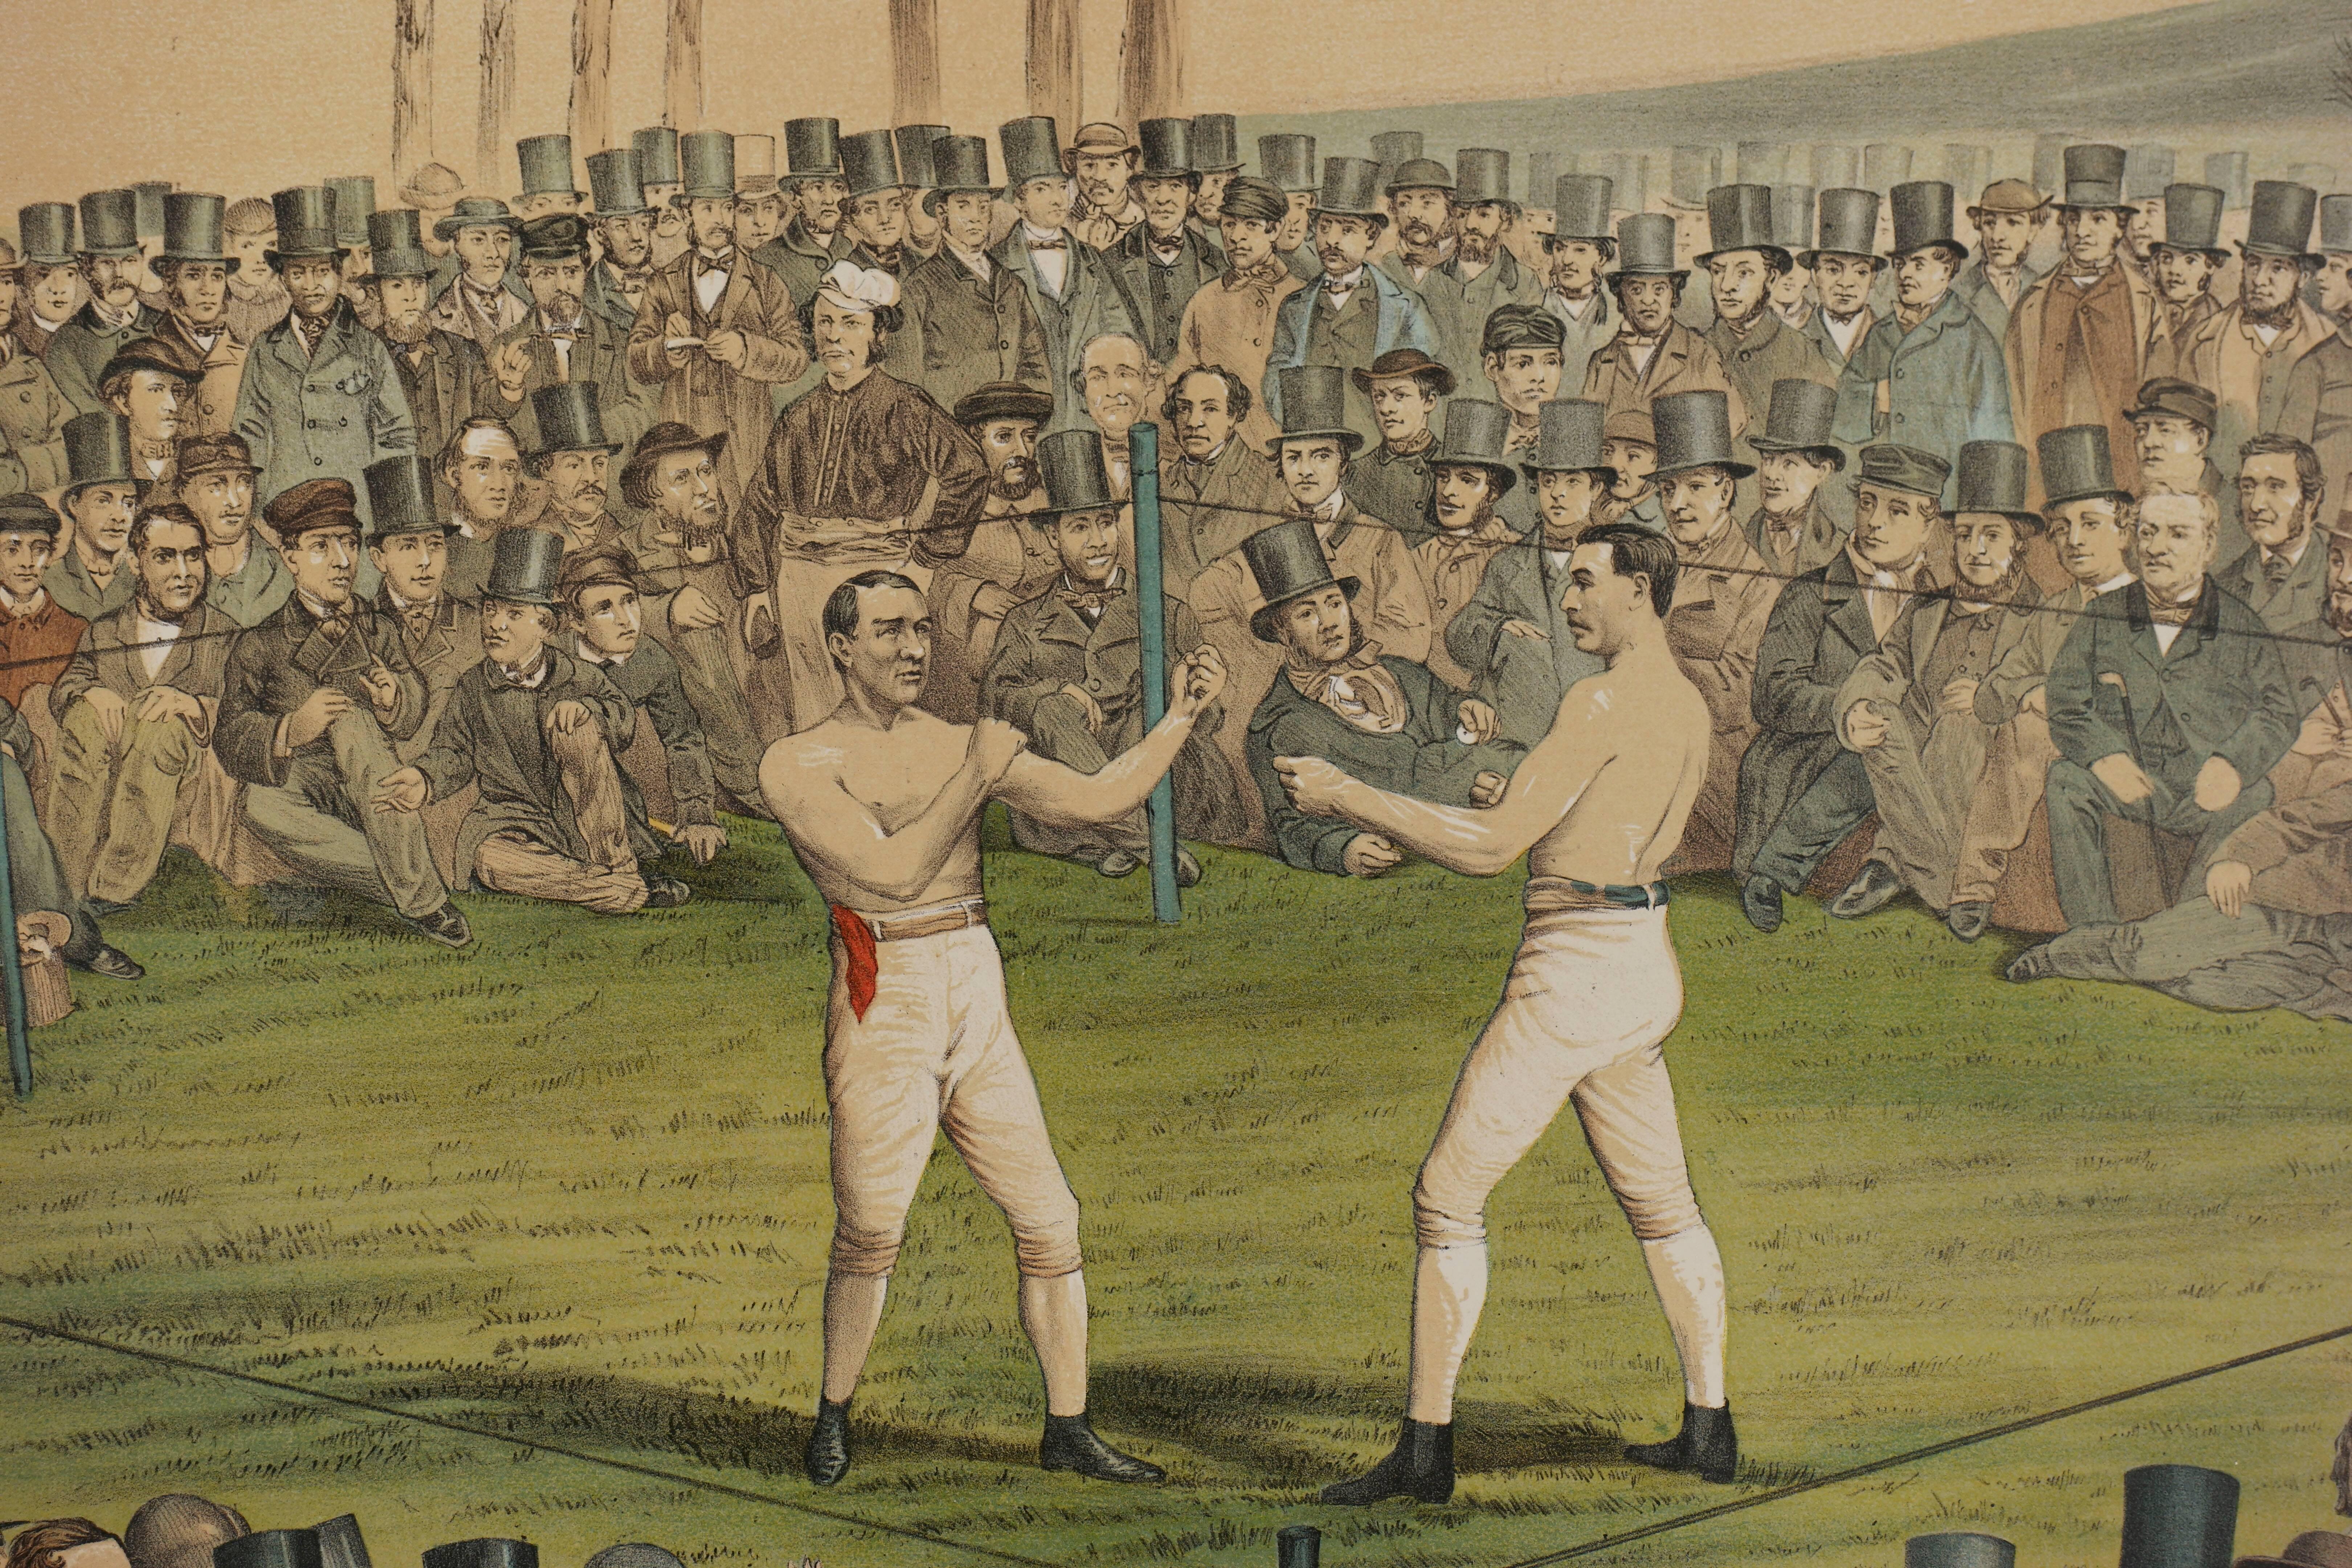  International Boxing Match  Between Heenen and Sayers 1860 - Realist Print by W. L. Walton